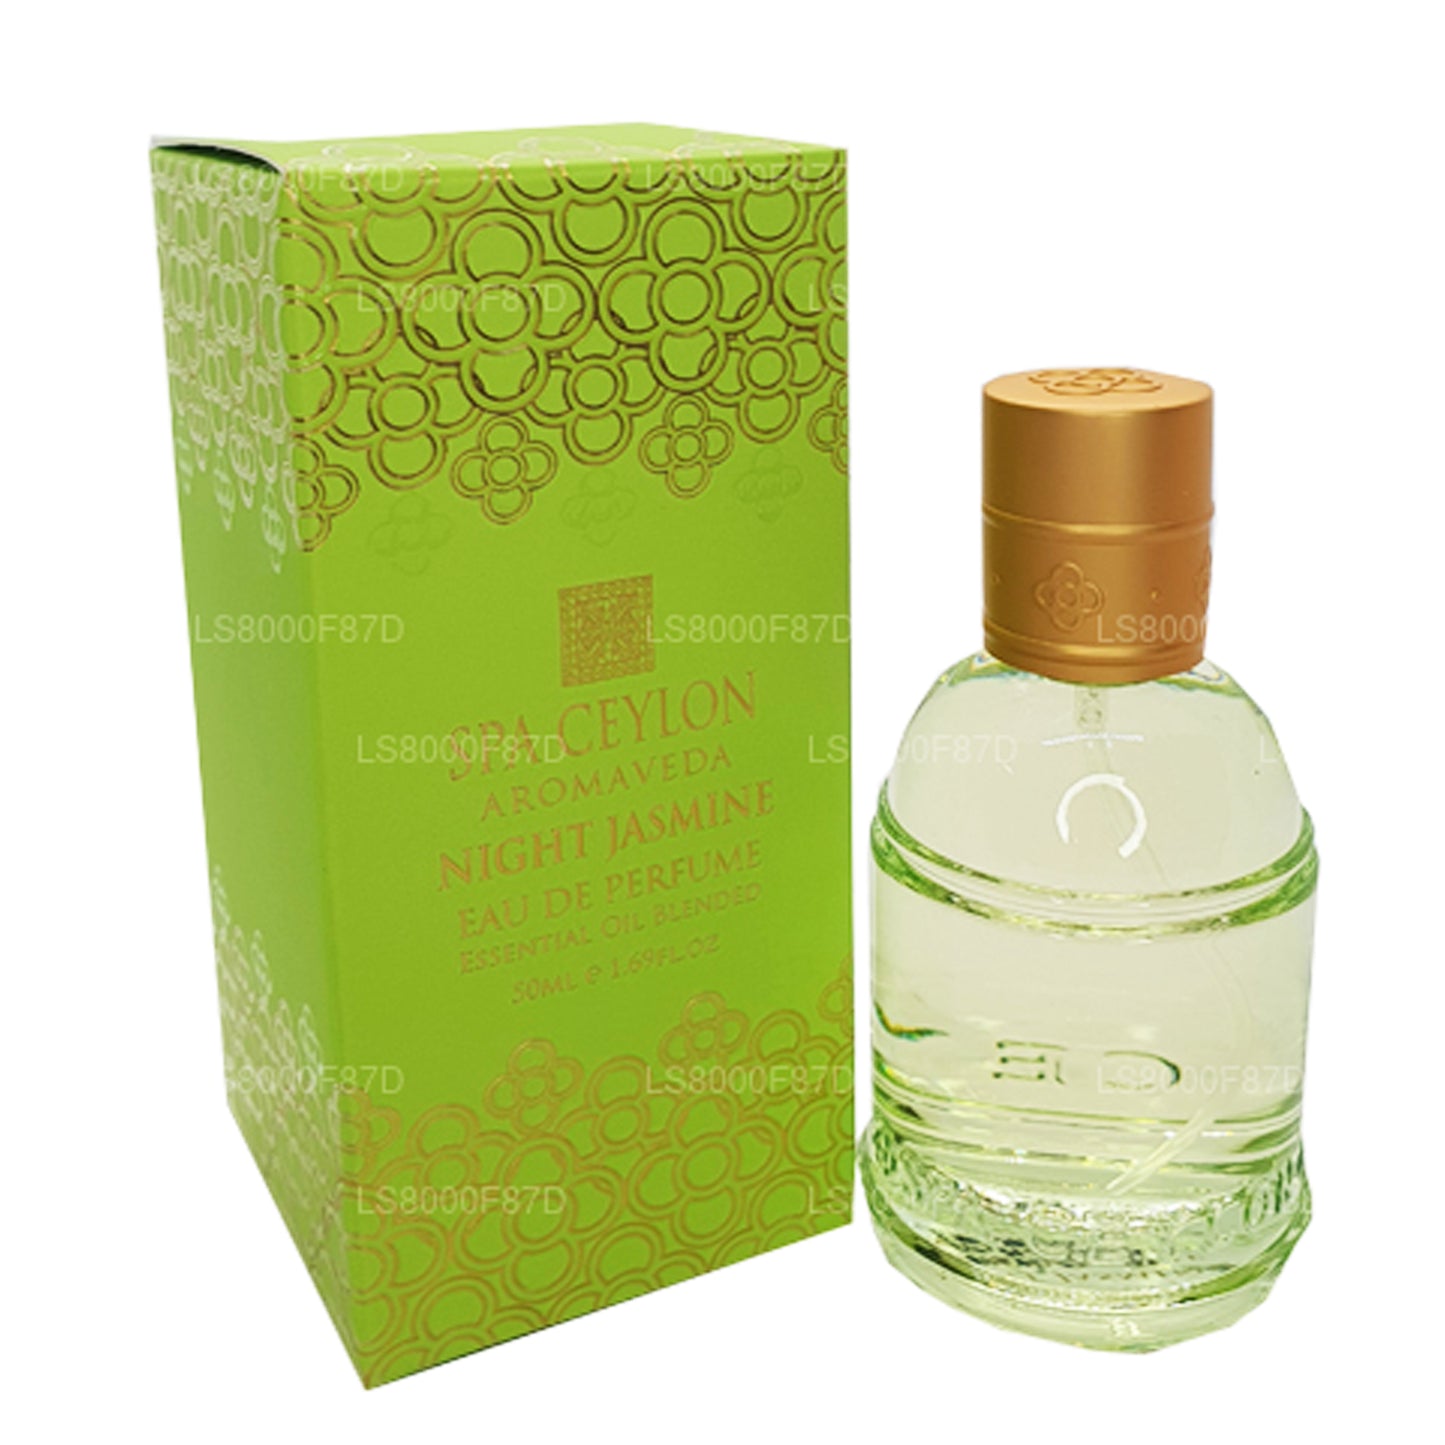 Spa Ceylon Night Jasmine Eau De Parfume æterisk olie blandet (50 ml)